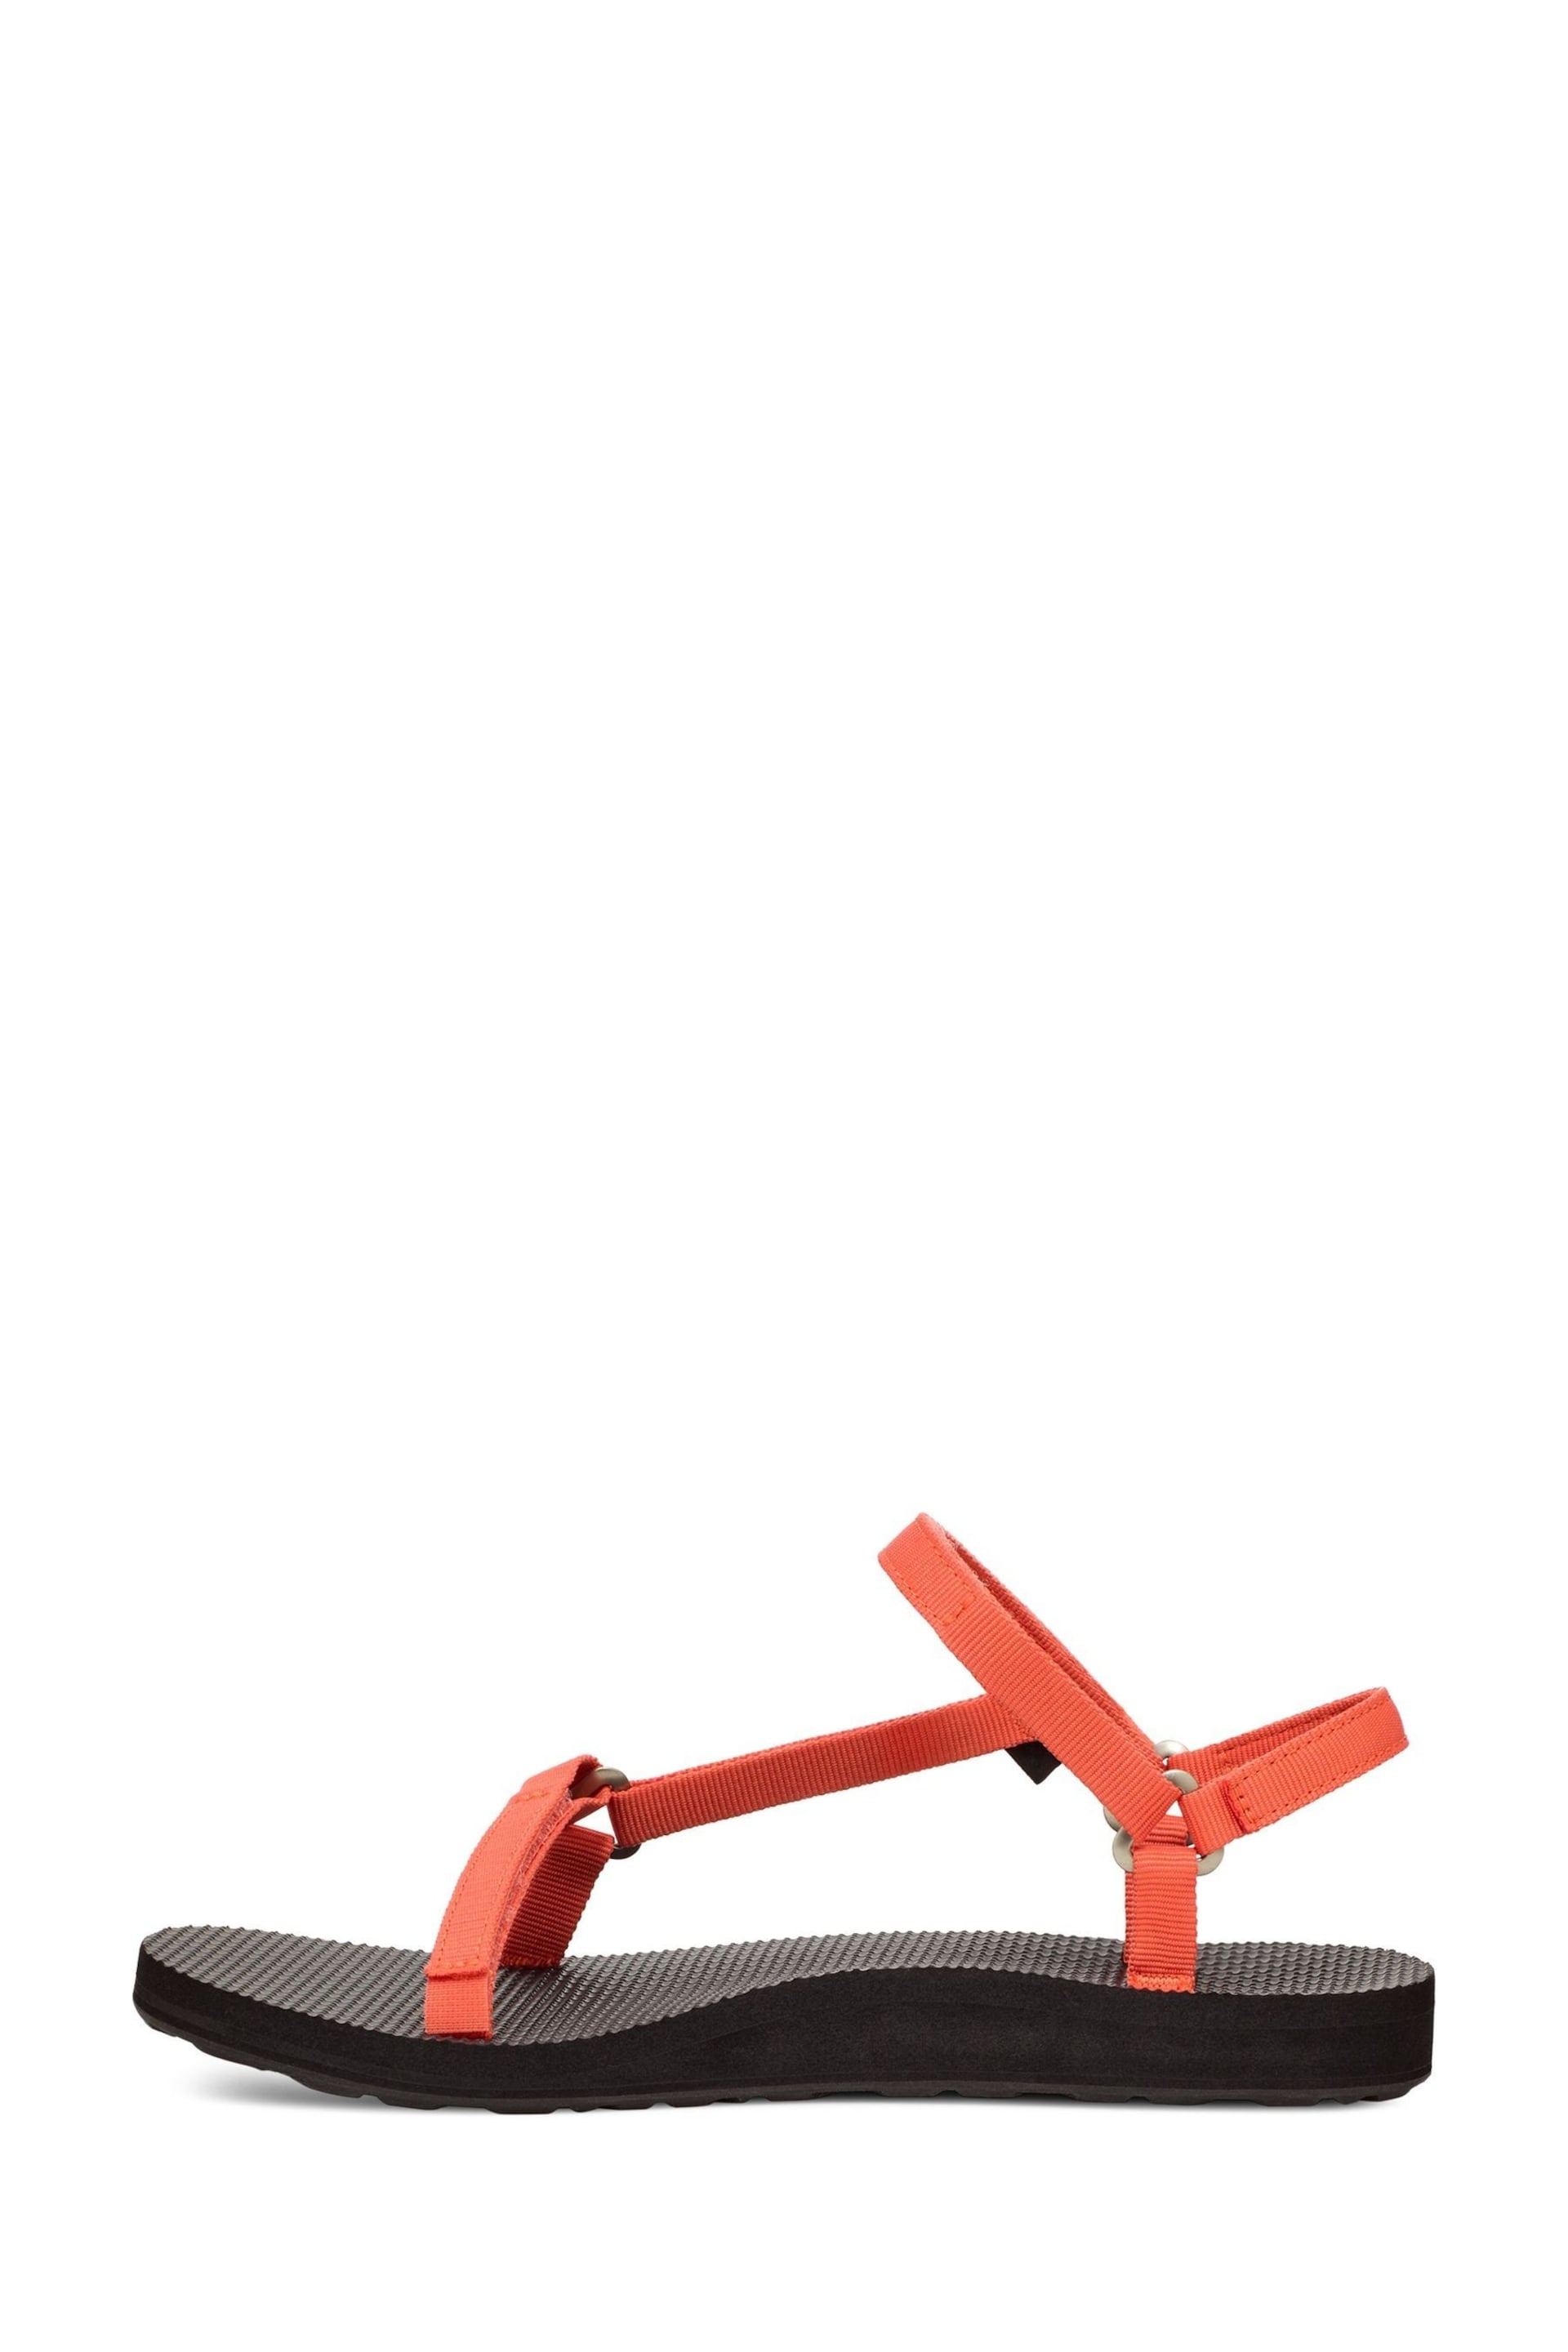 Teva Orange Original Universal Slim Sandals - Image 4 of 8